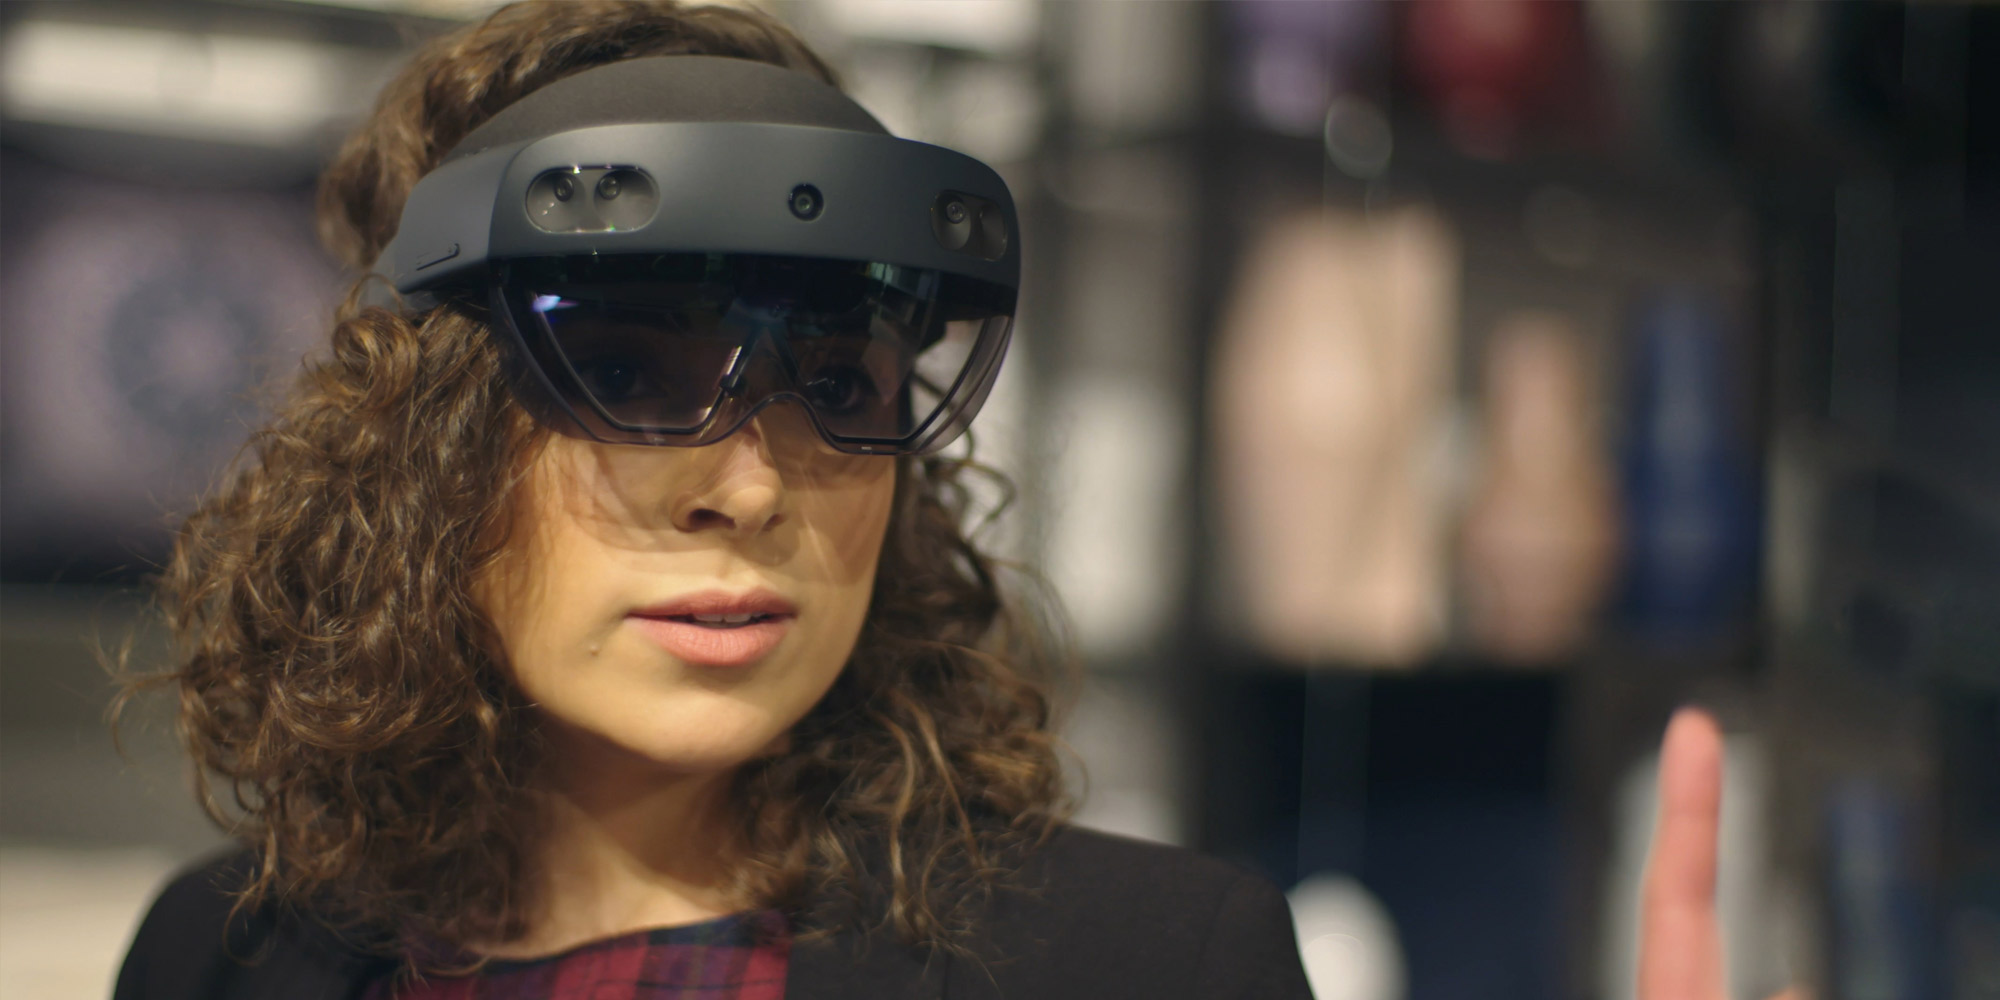 A woman wearing HoloLens